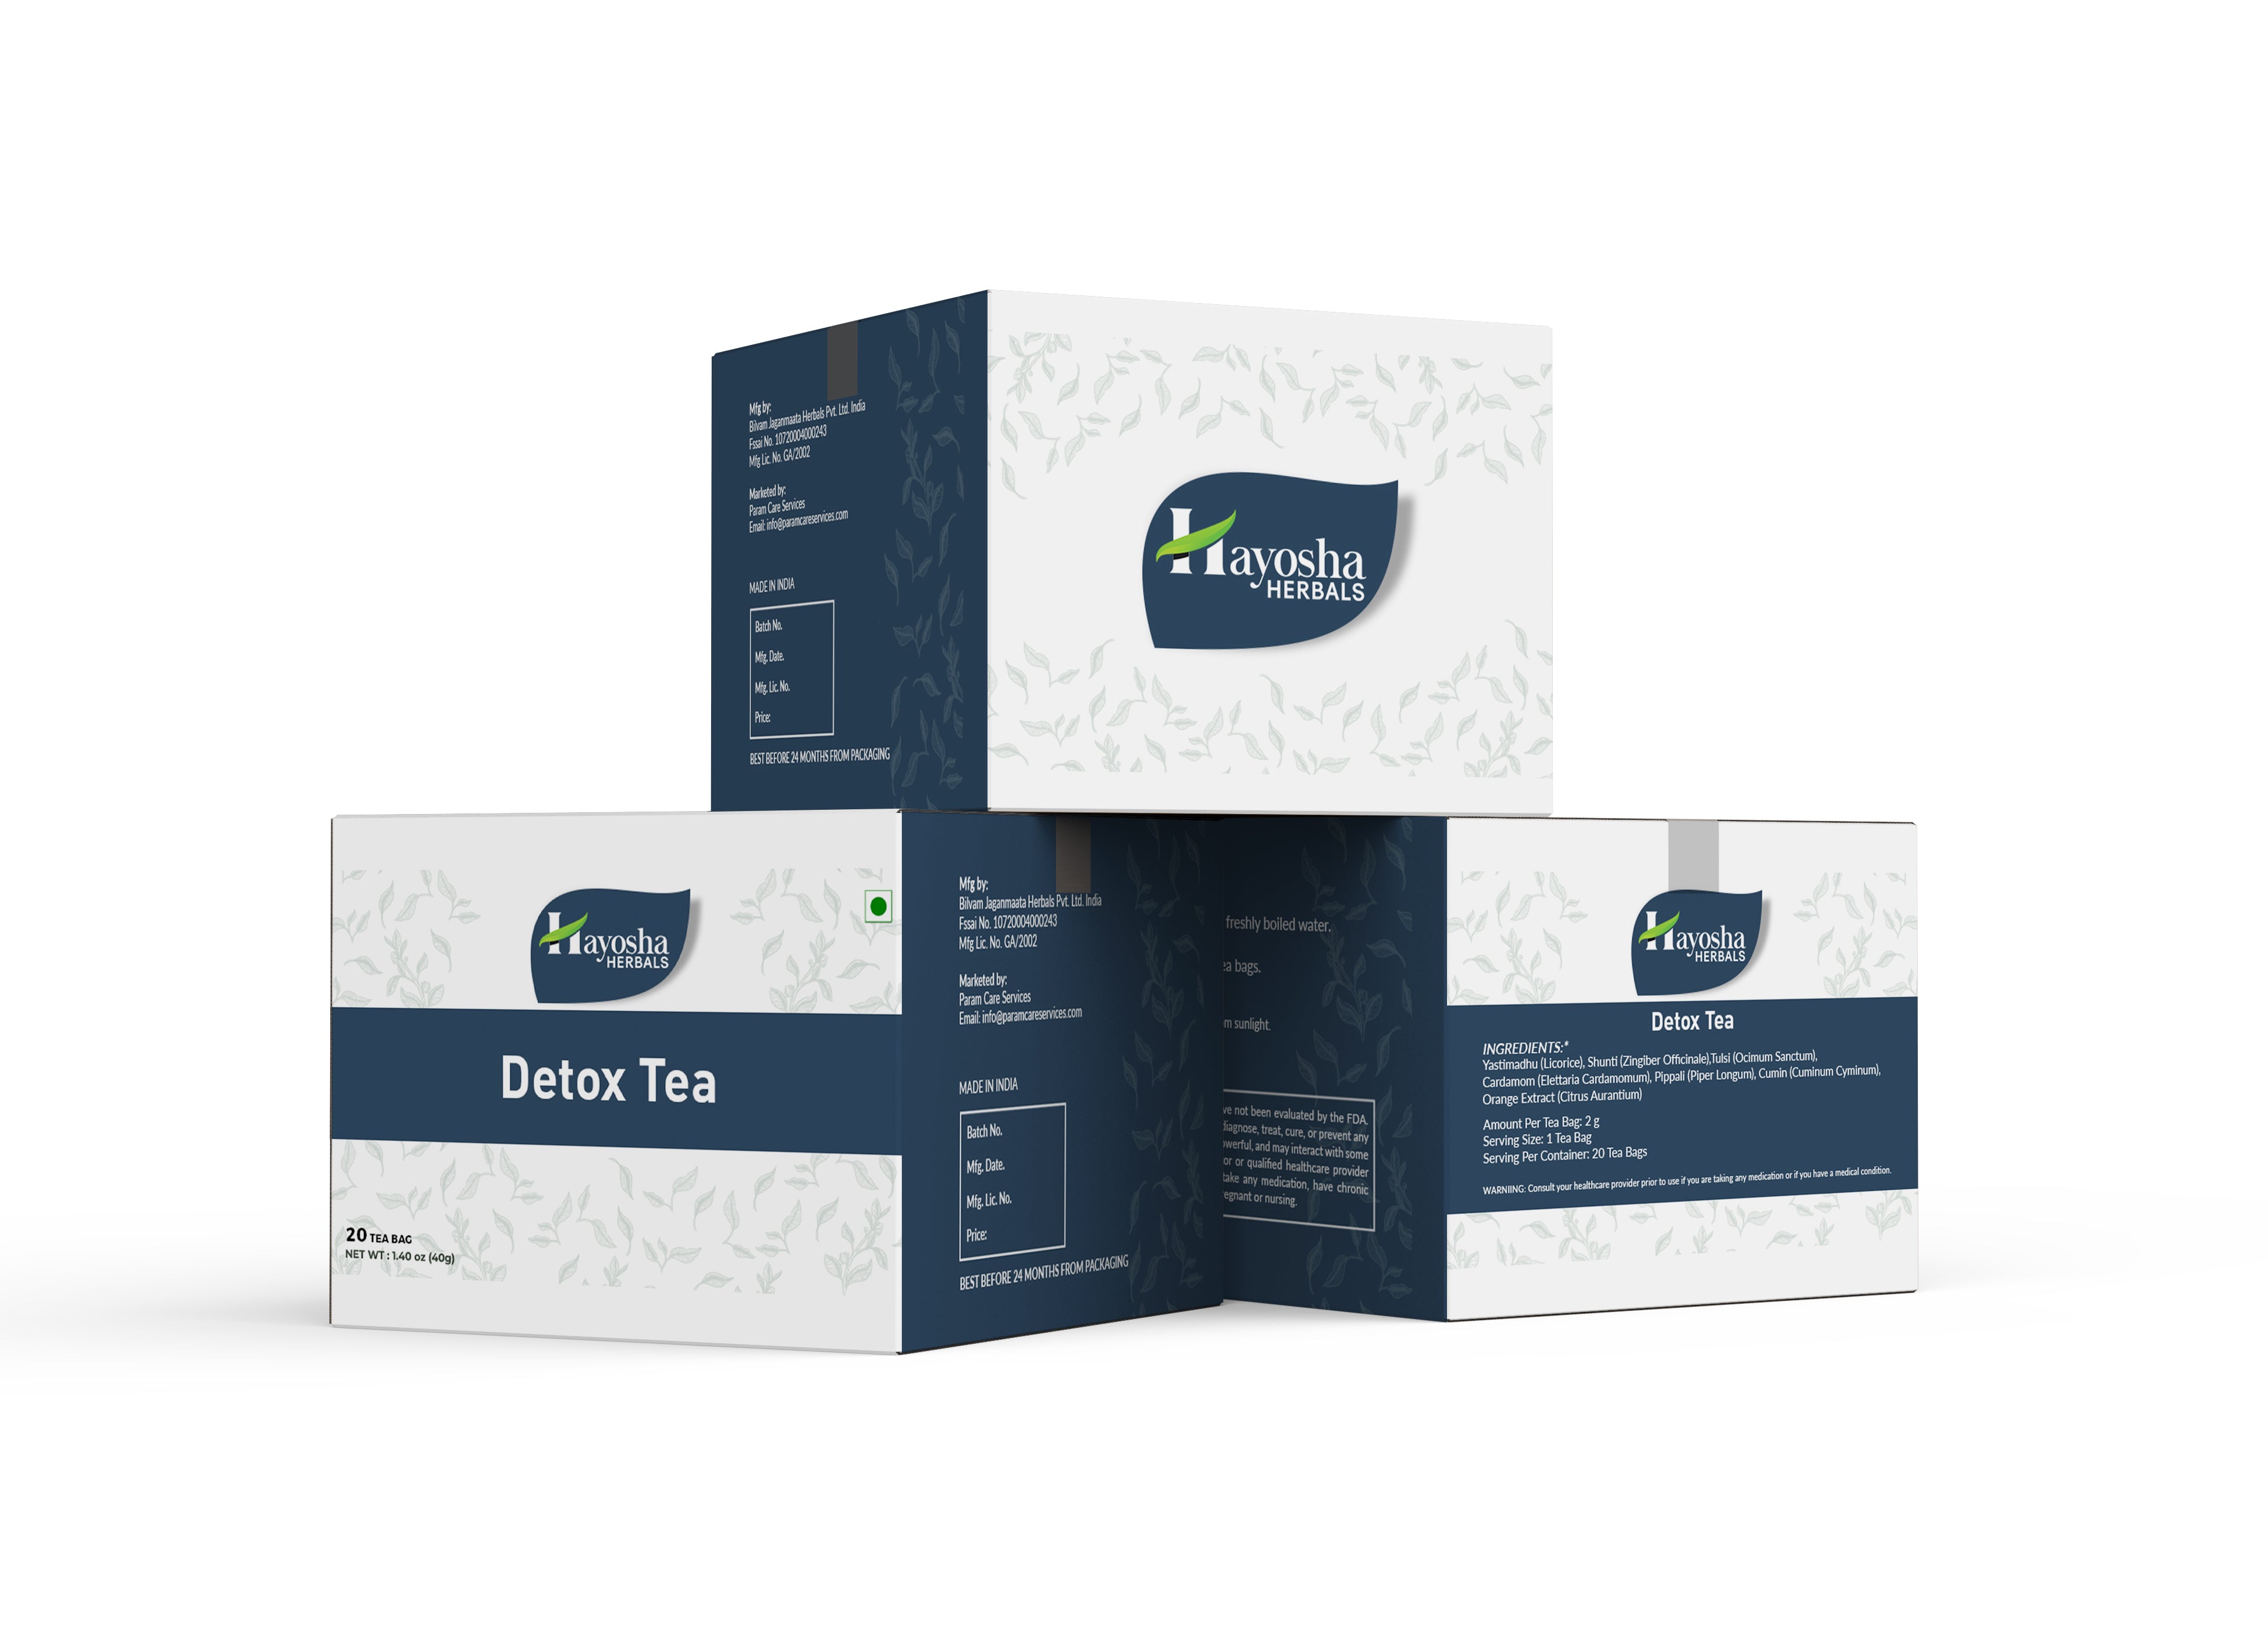 Hayosha Herbals - Detox Tea